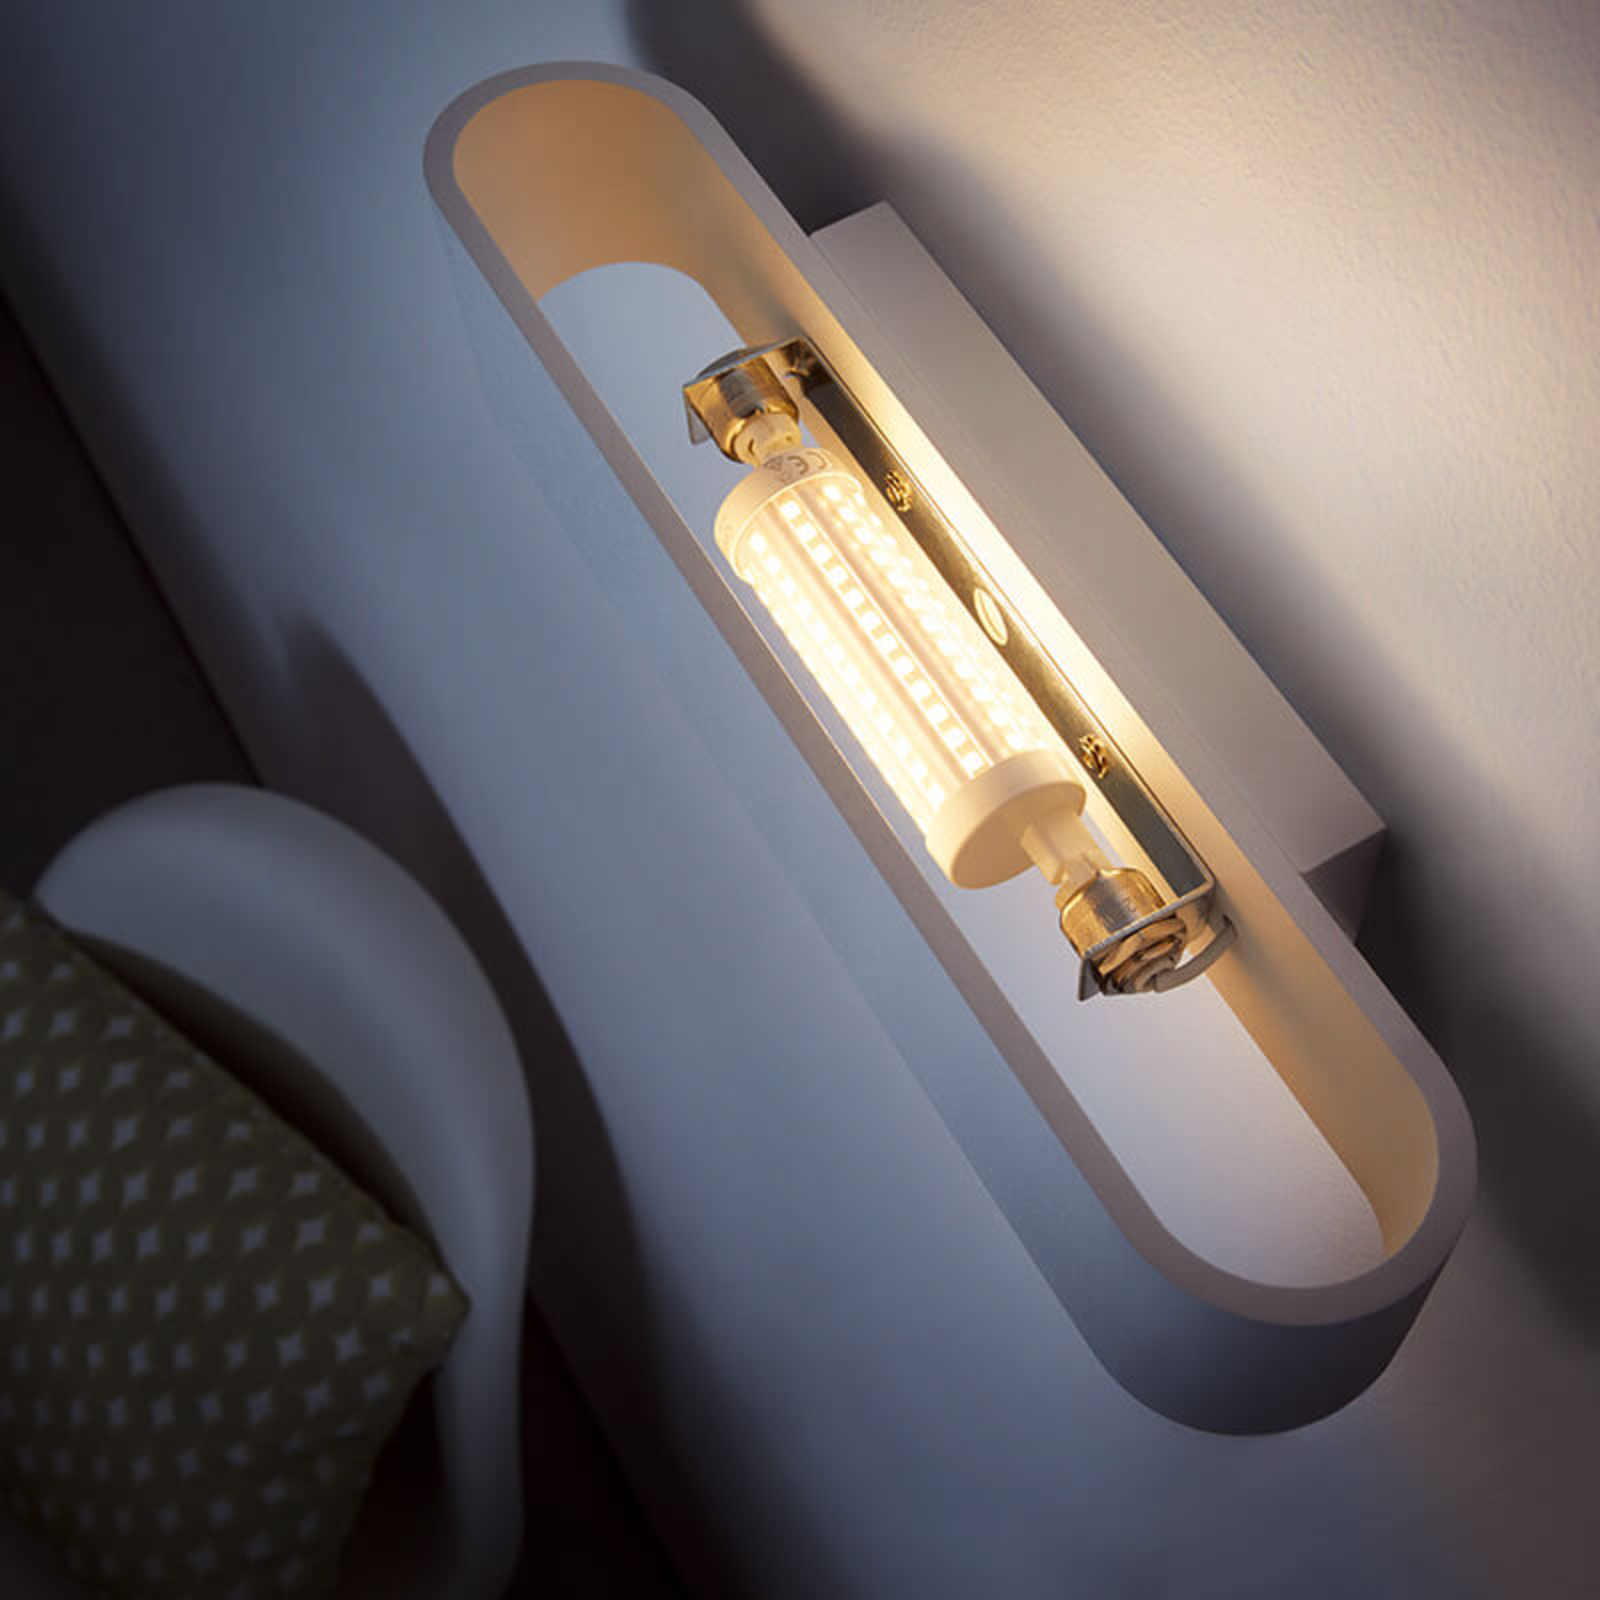 Moskee melk wit Becks OSRAM LED staaflamp R7s 15W 11,8cm 827 dimbaar | Lampen24.nl